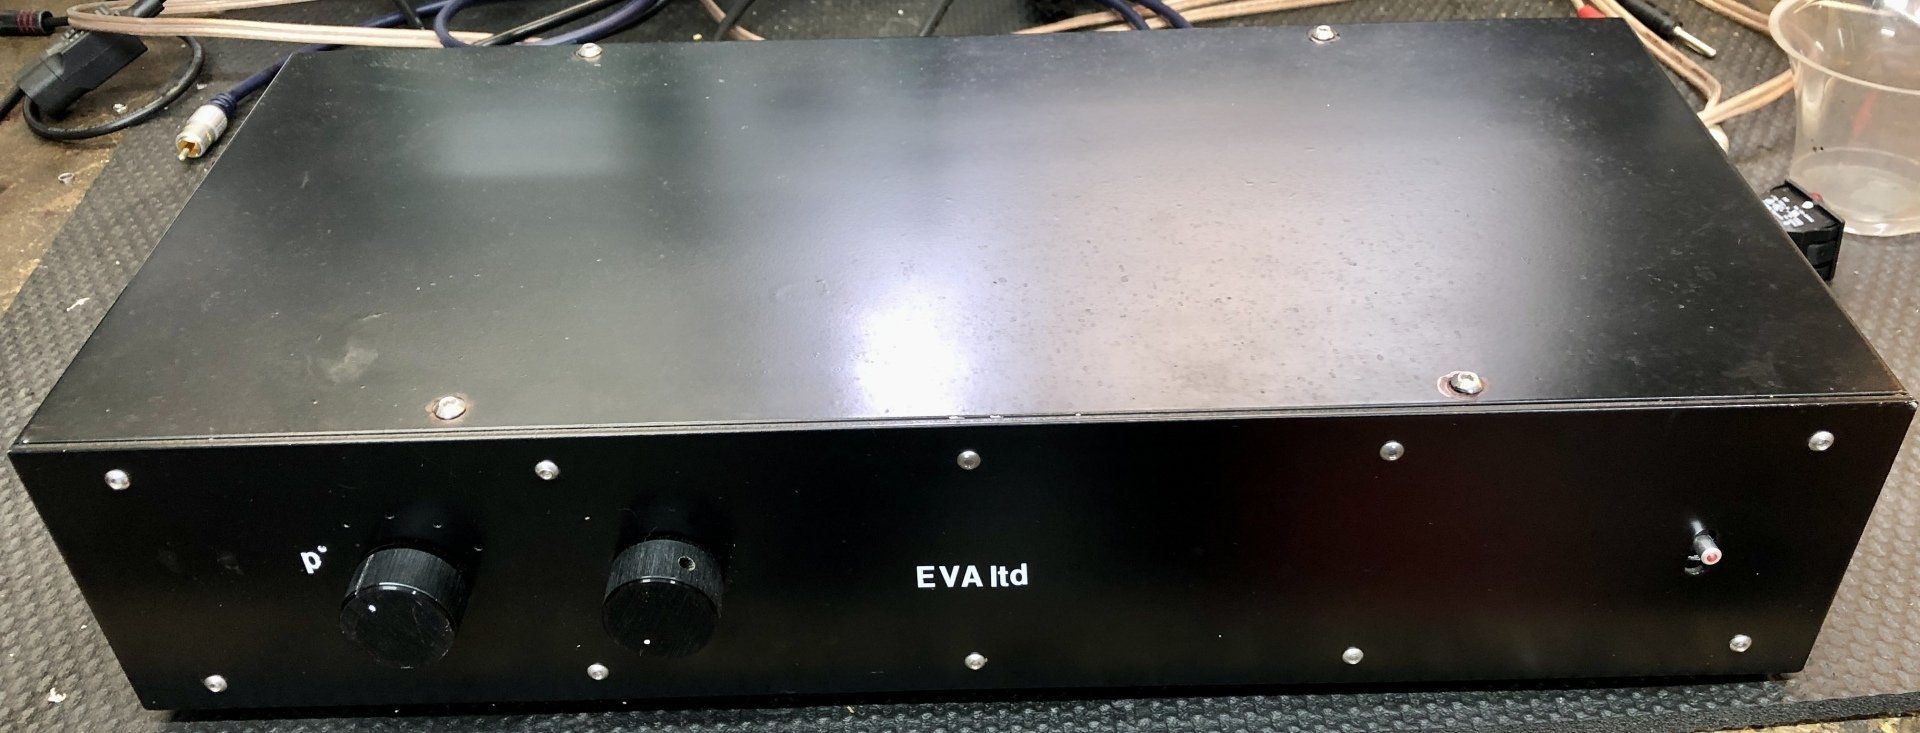 EVA Ltd integrated pre amplifier for sale